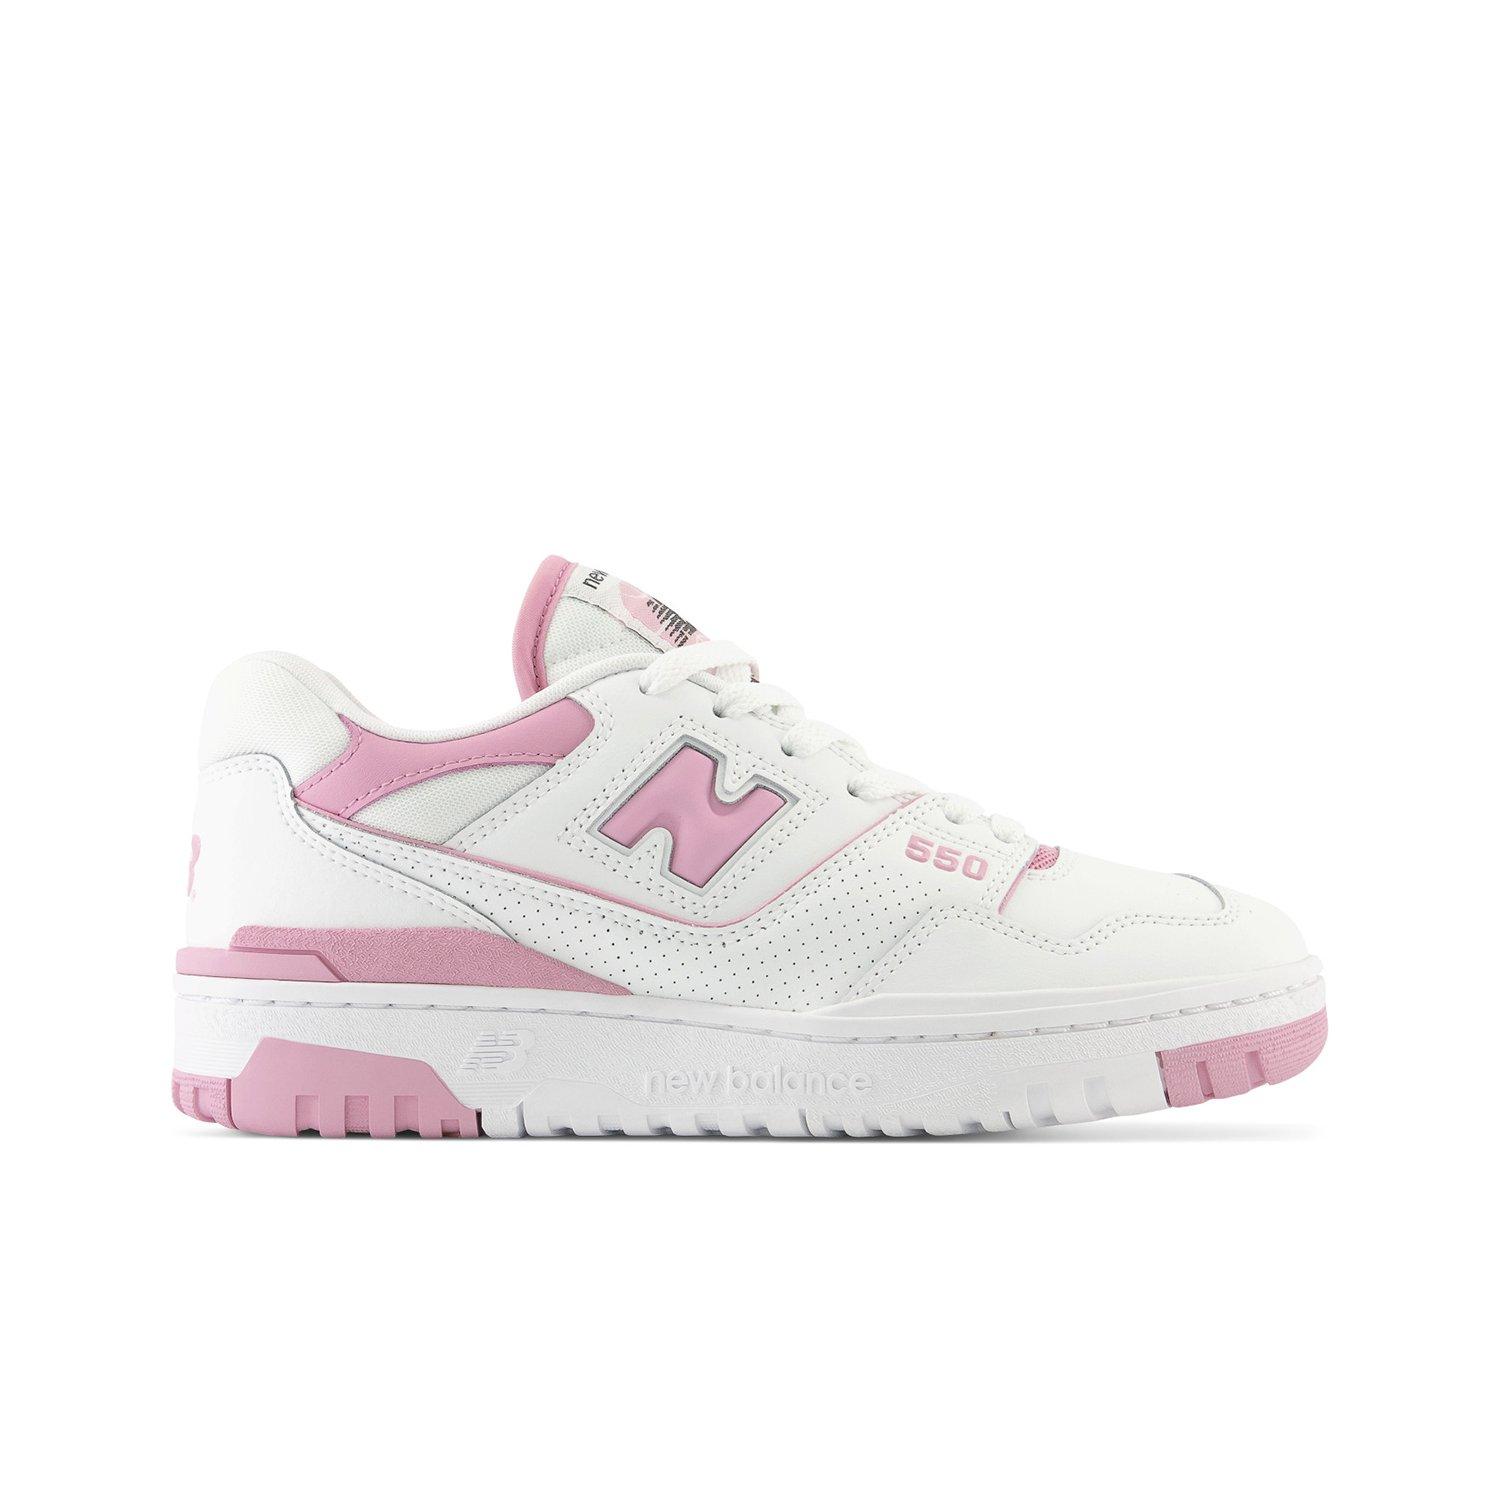 New Balance 550 "White/Pink" Women's